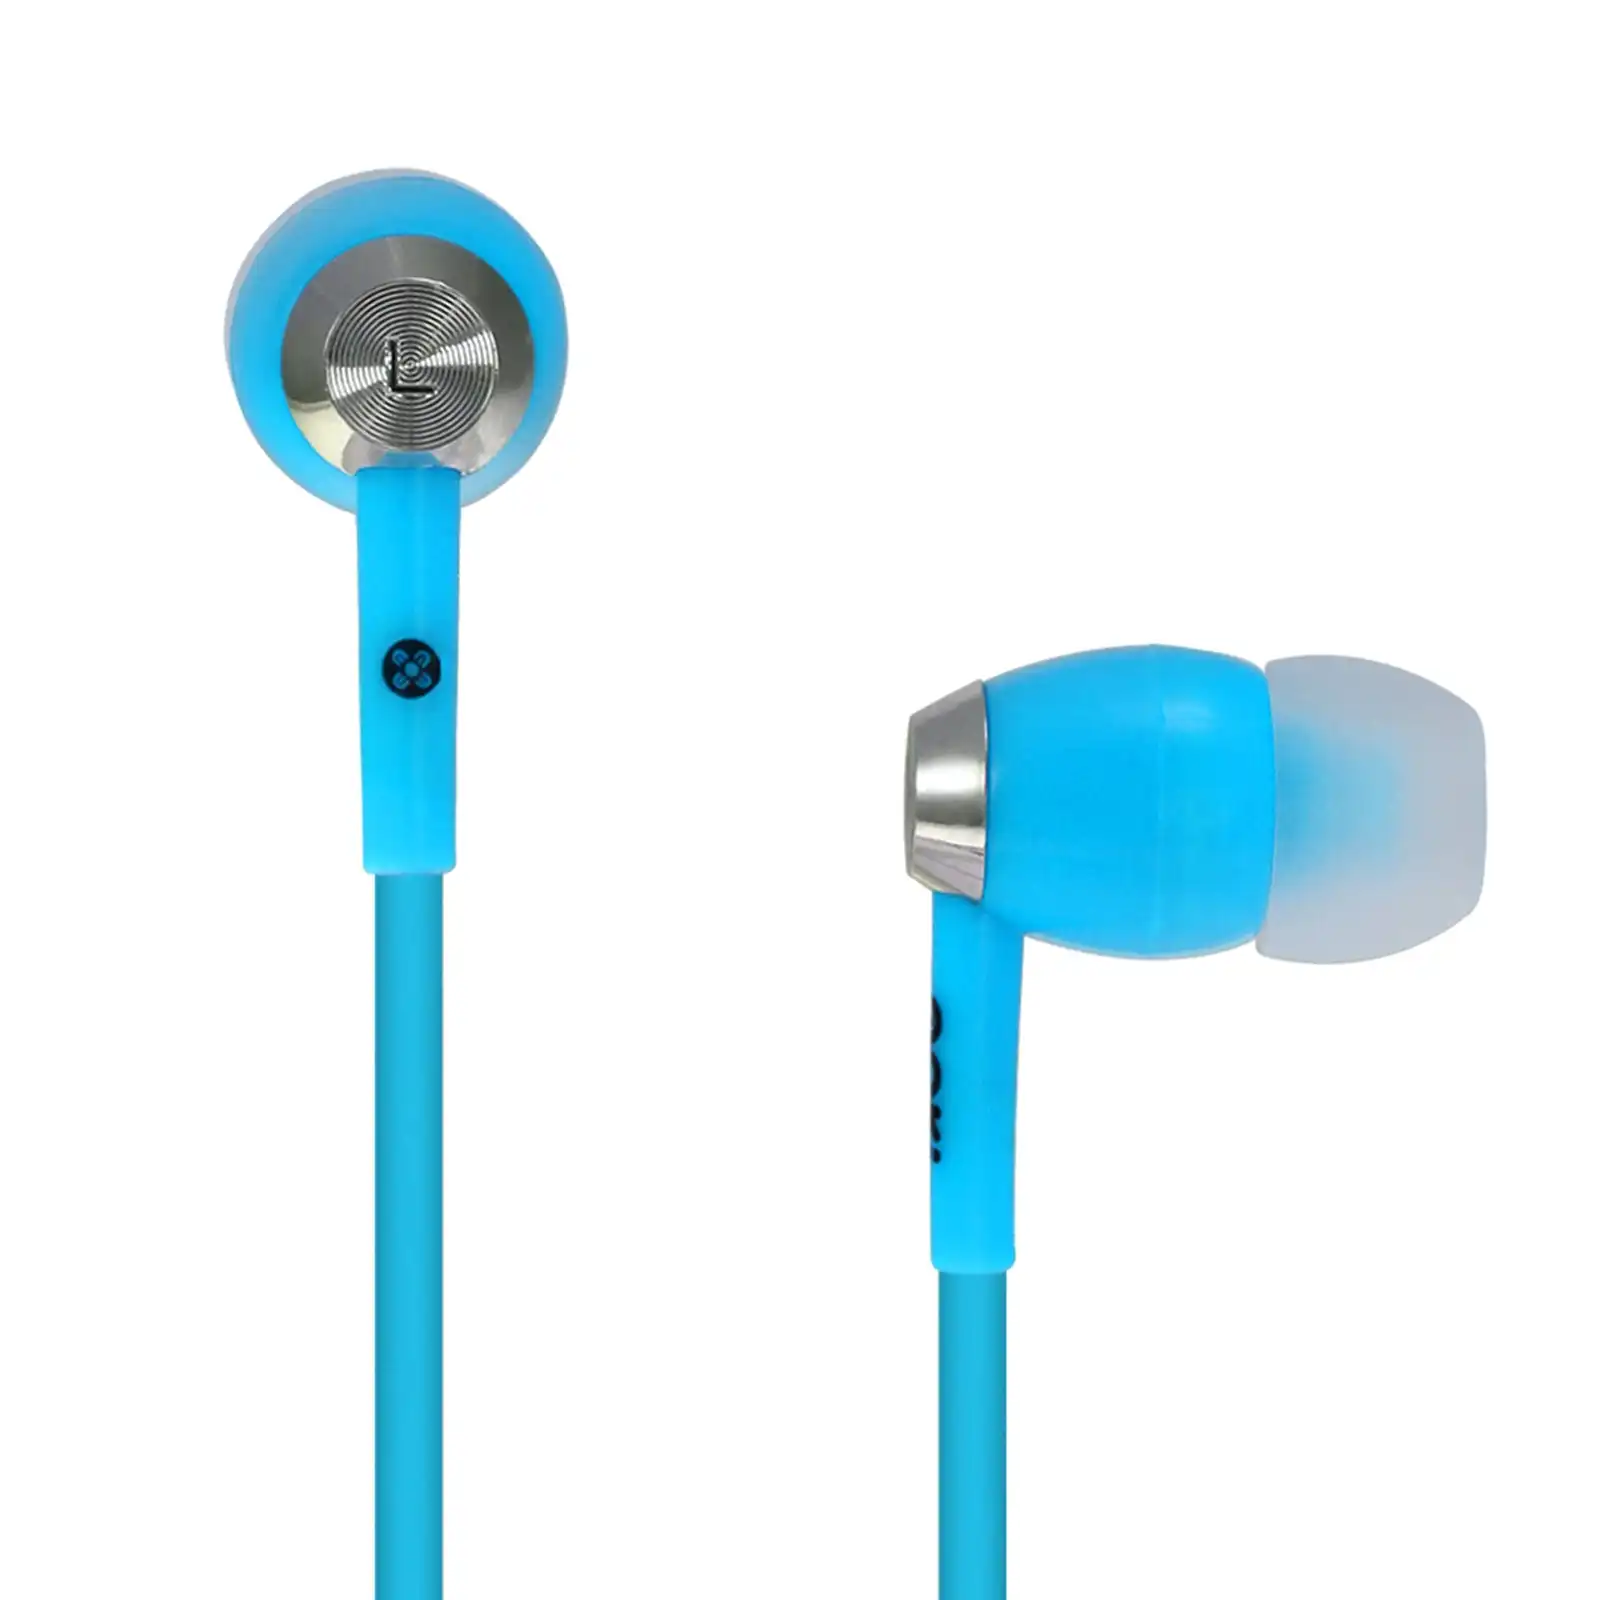 Moki Noise Isolation Hyperbuds Headphones 3.5mm Earphones for iPhone/Android BL